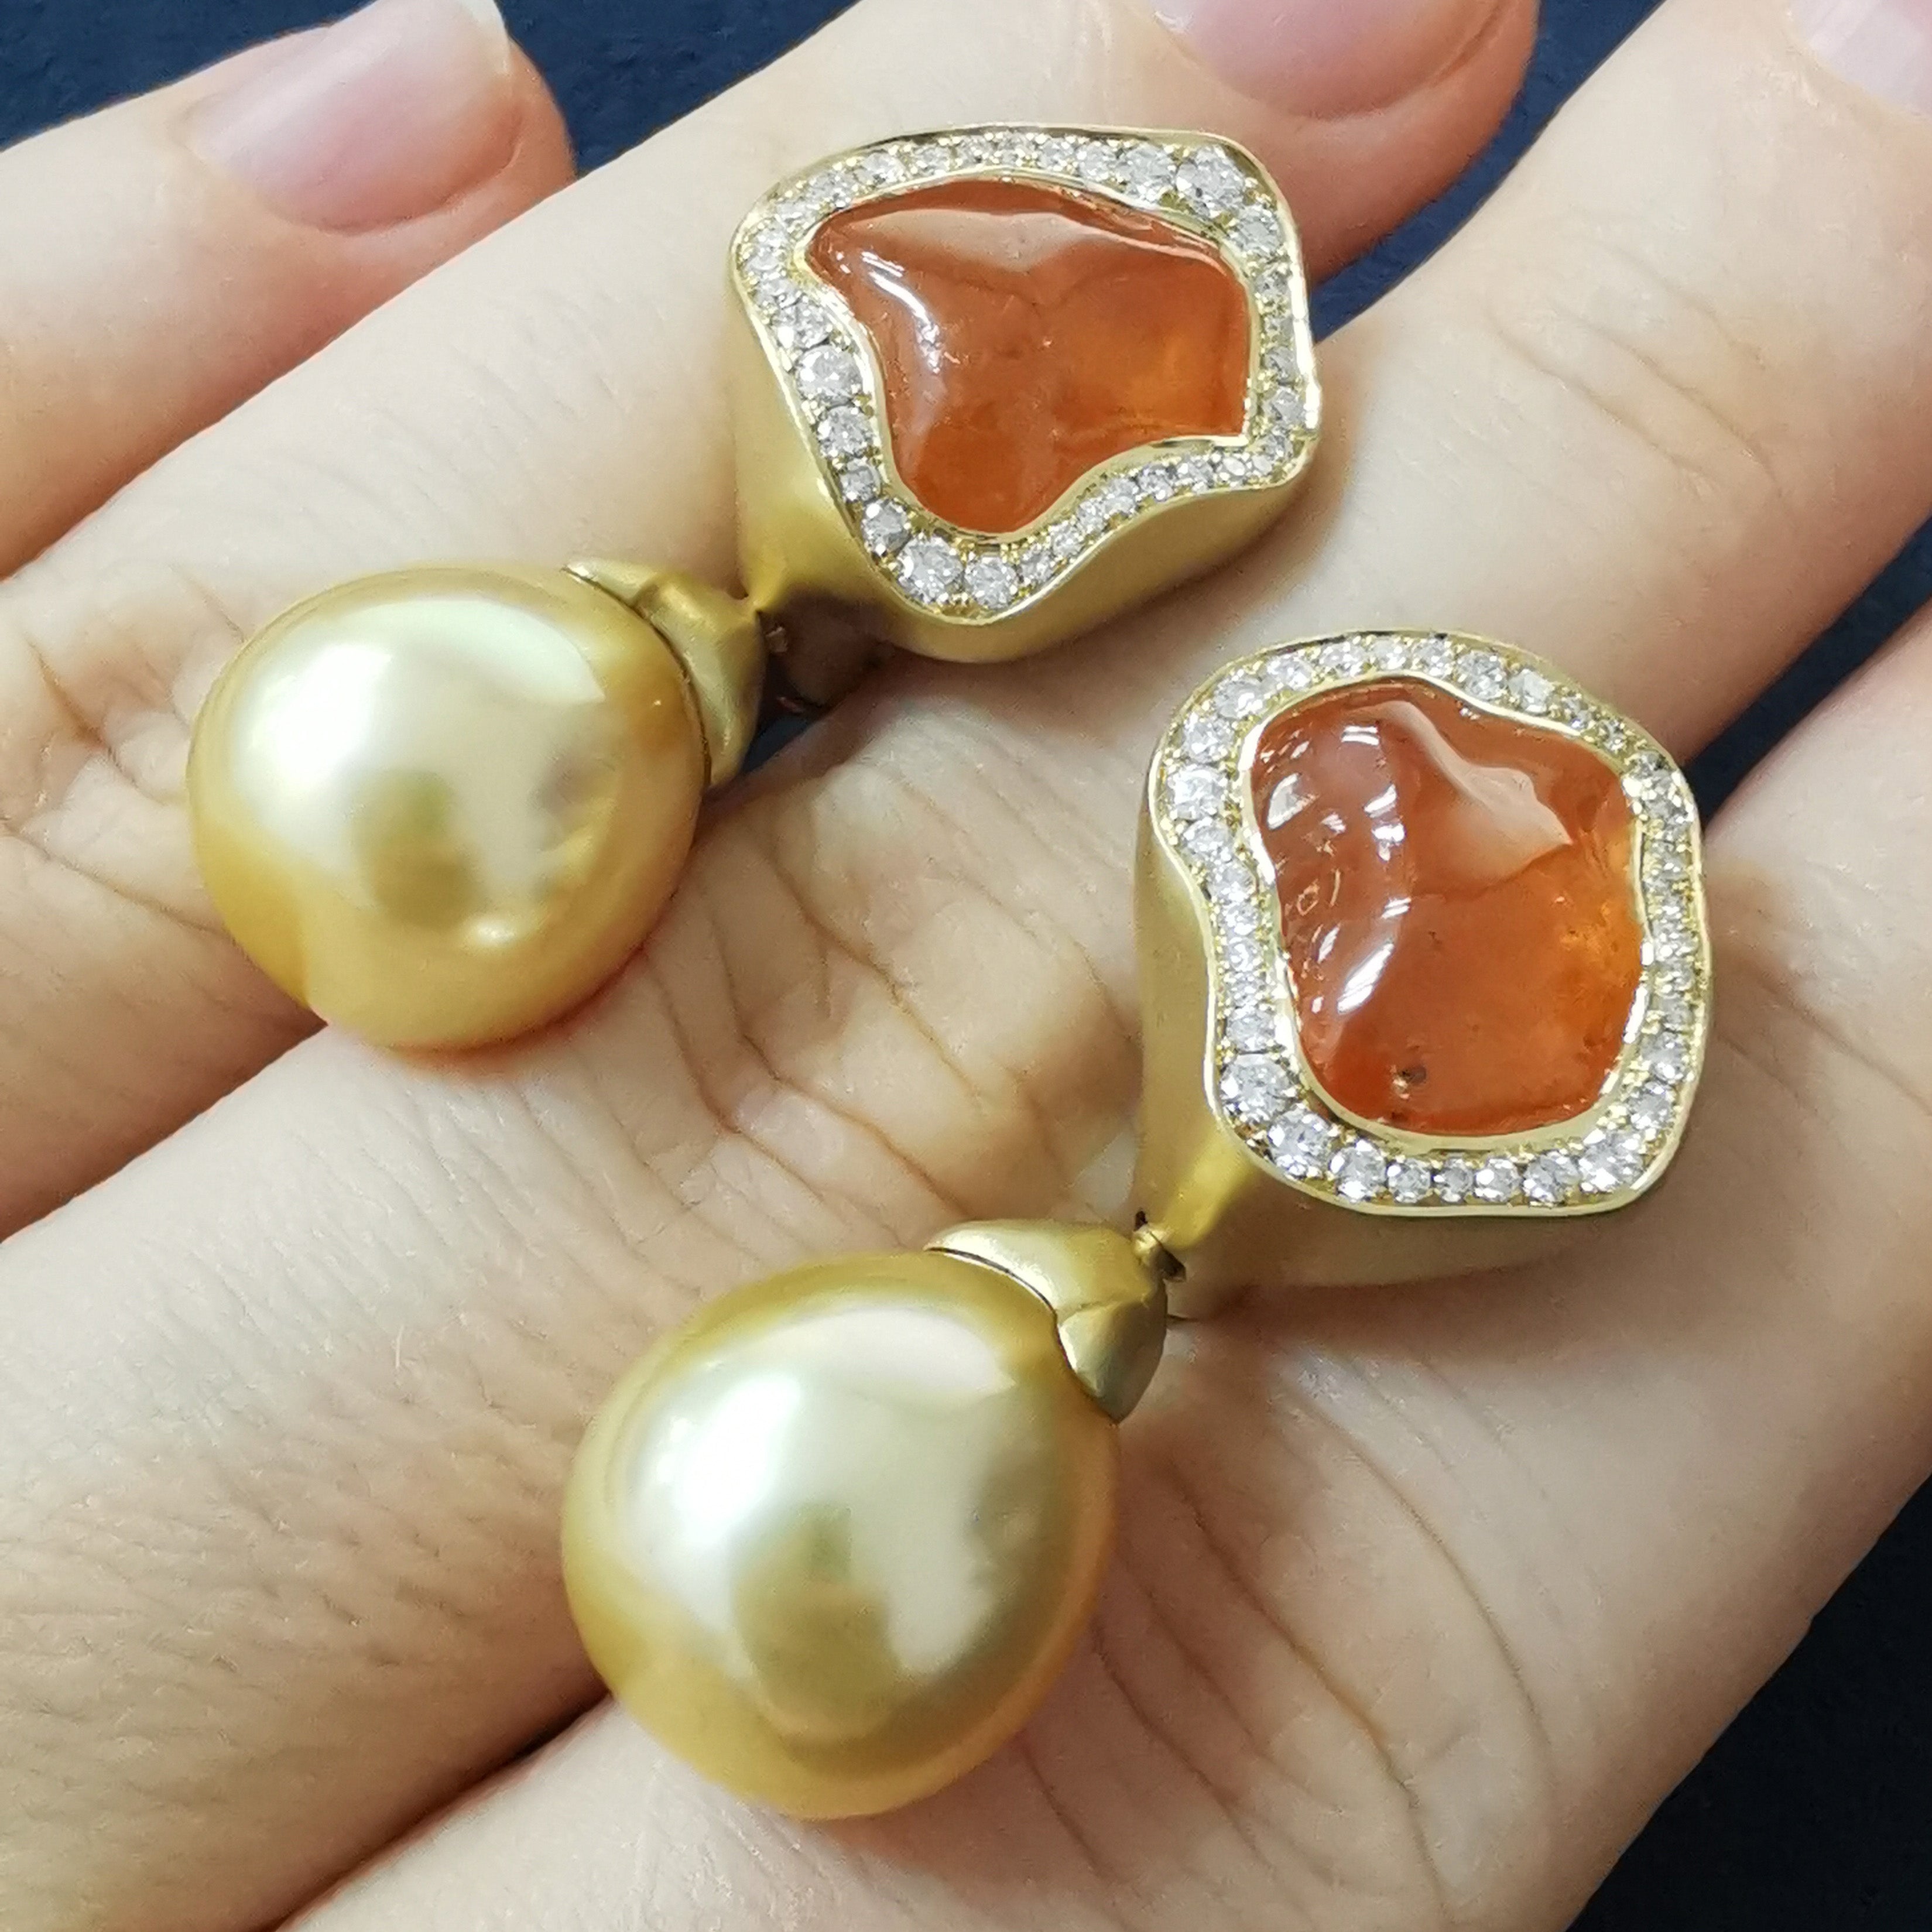 E 0030-84/1 18K Yellow Gold, Spessartine, Golden Sea Pearl, Diamonds Earrings